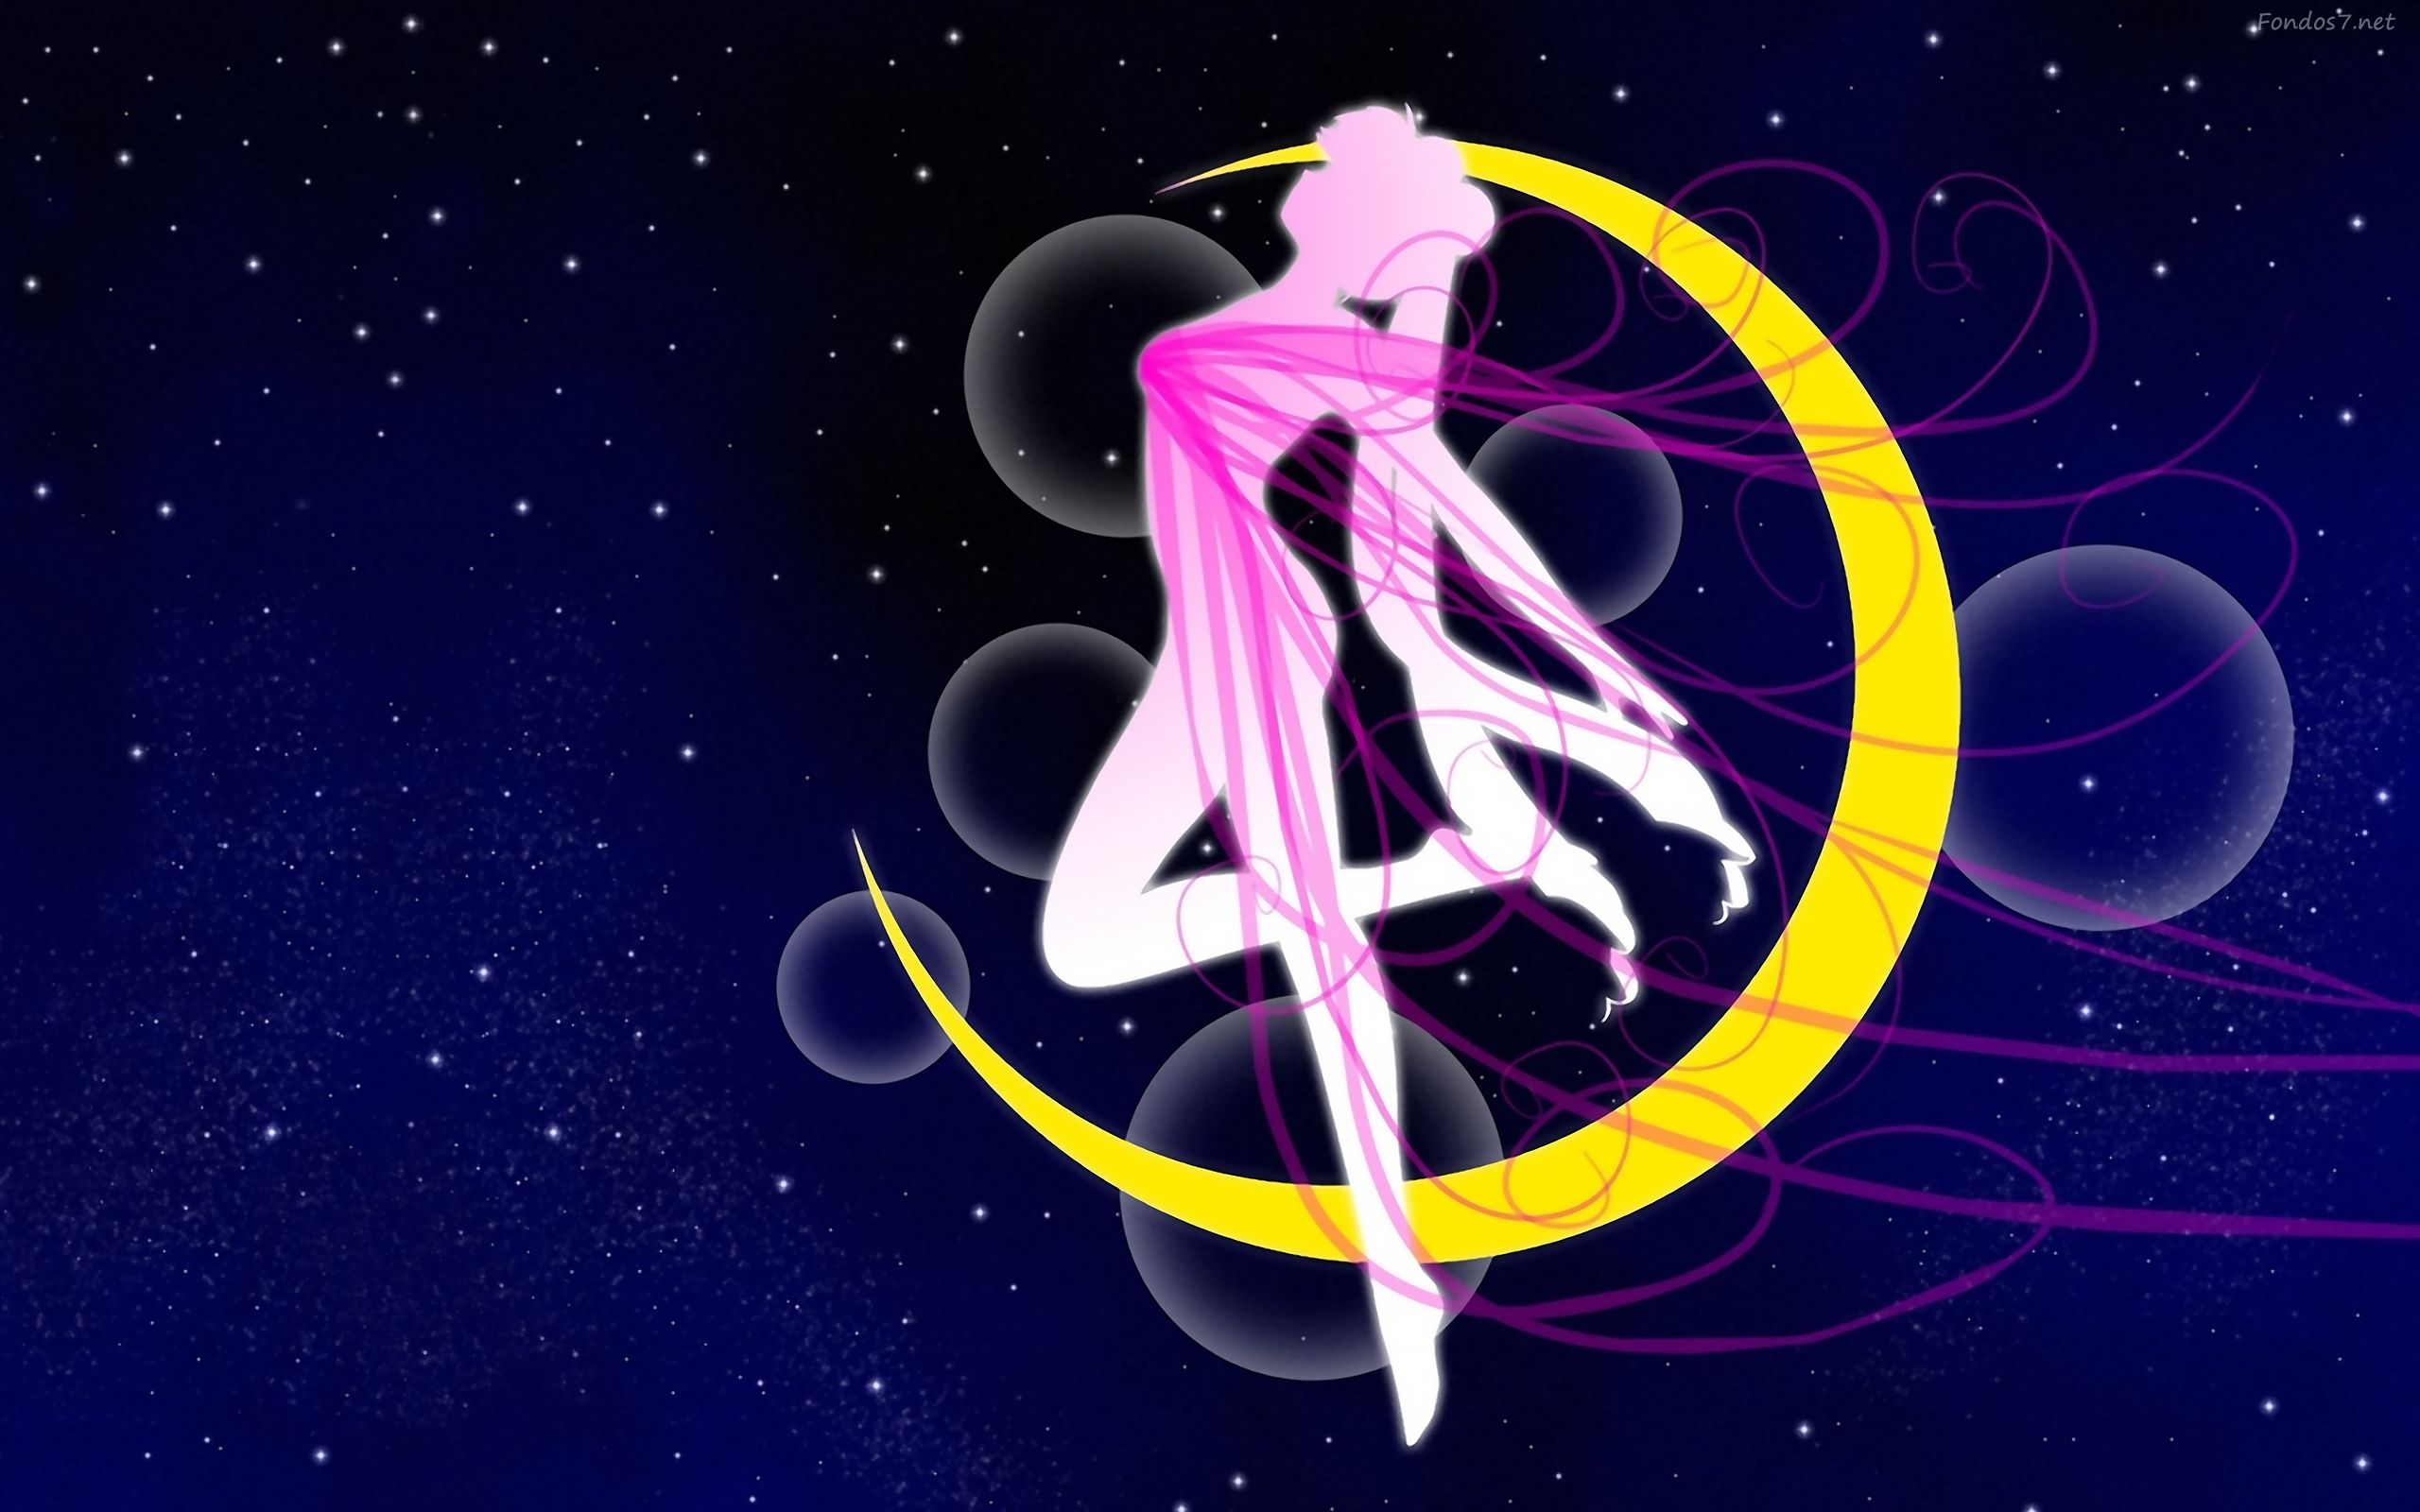 Download Sailor Moon Wallpaper 2560x1600 | Full HD Wallpapers